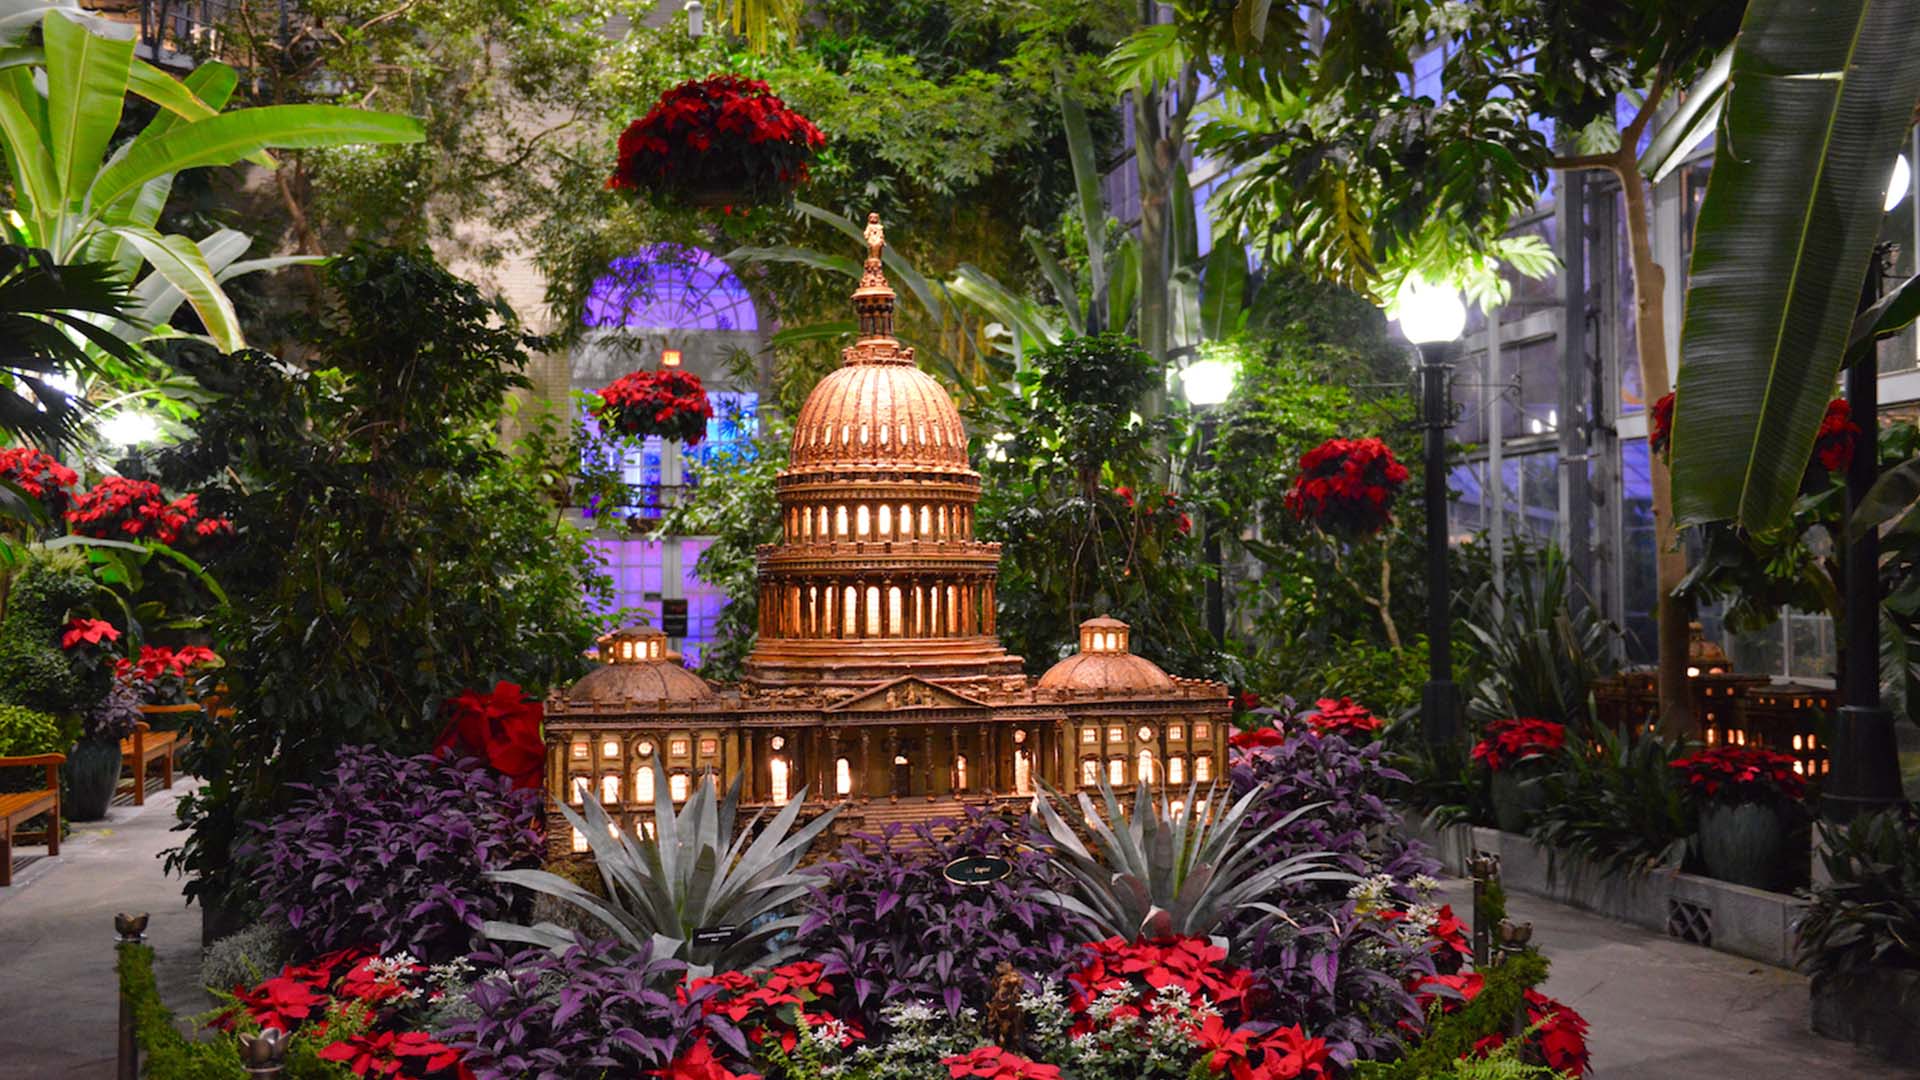 United States Botanical Garden holiday display